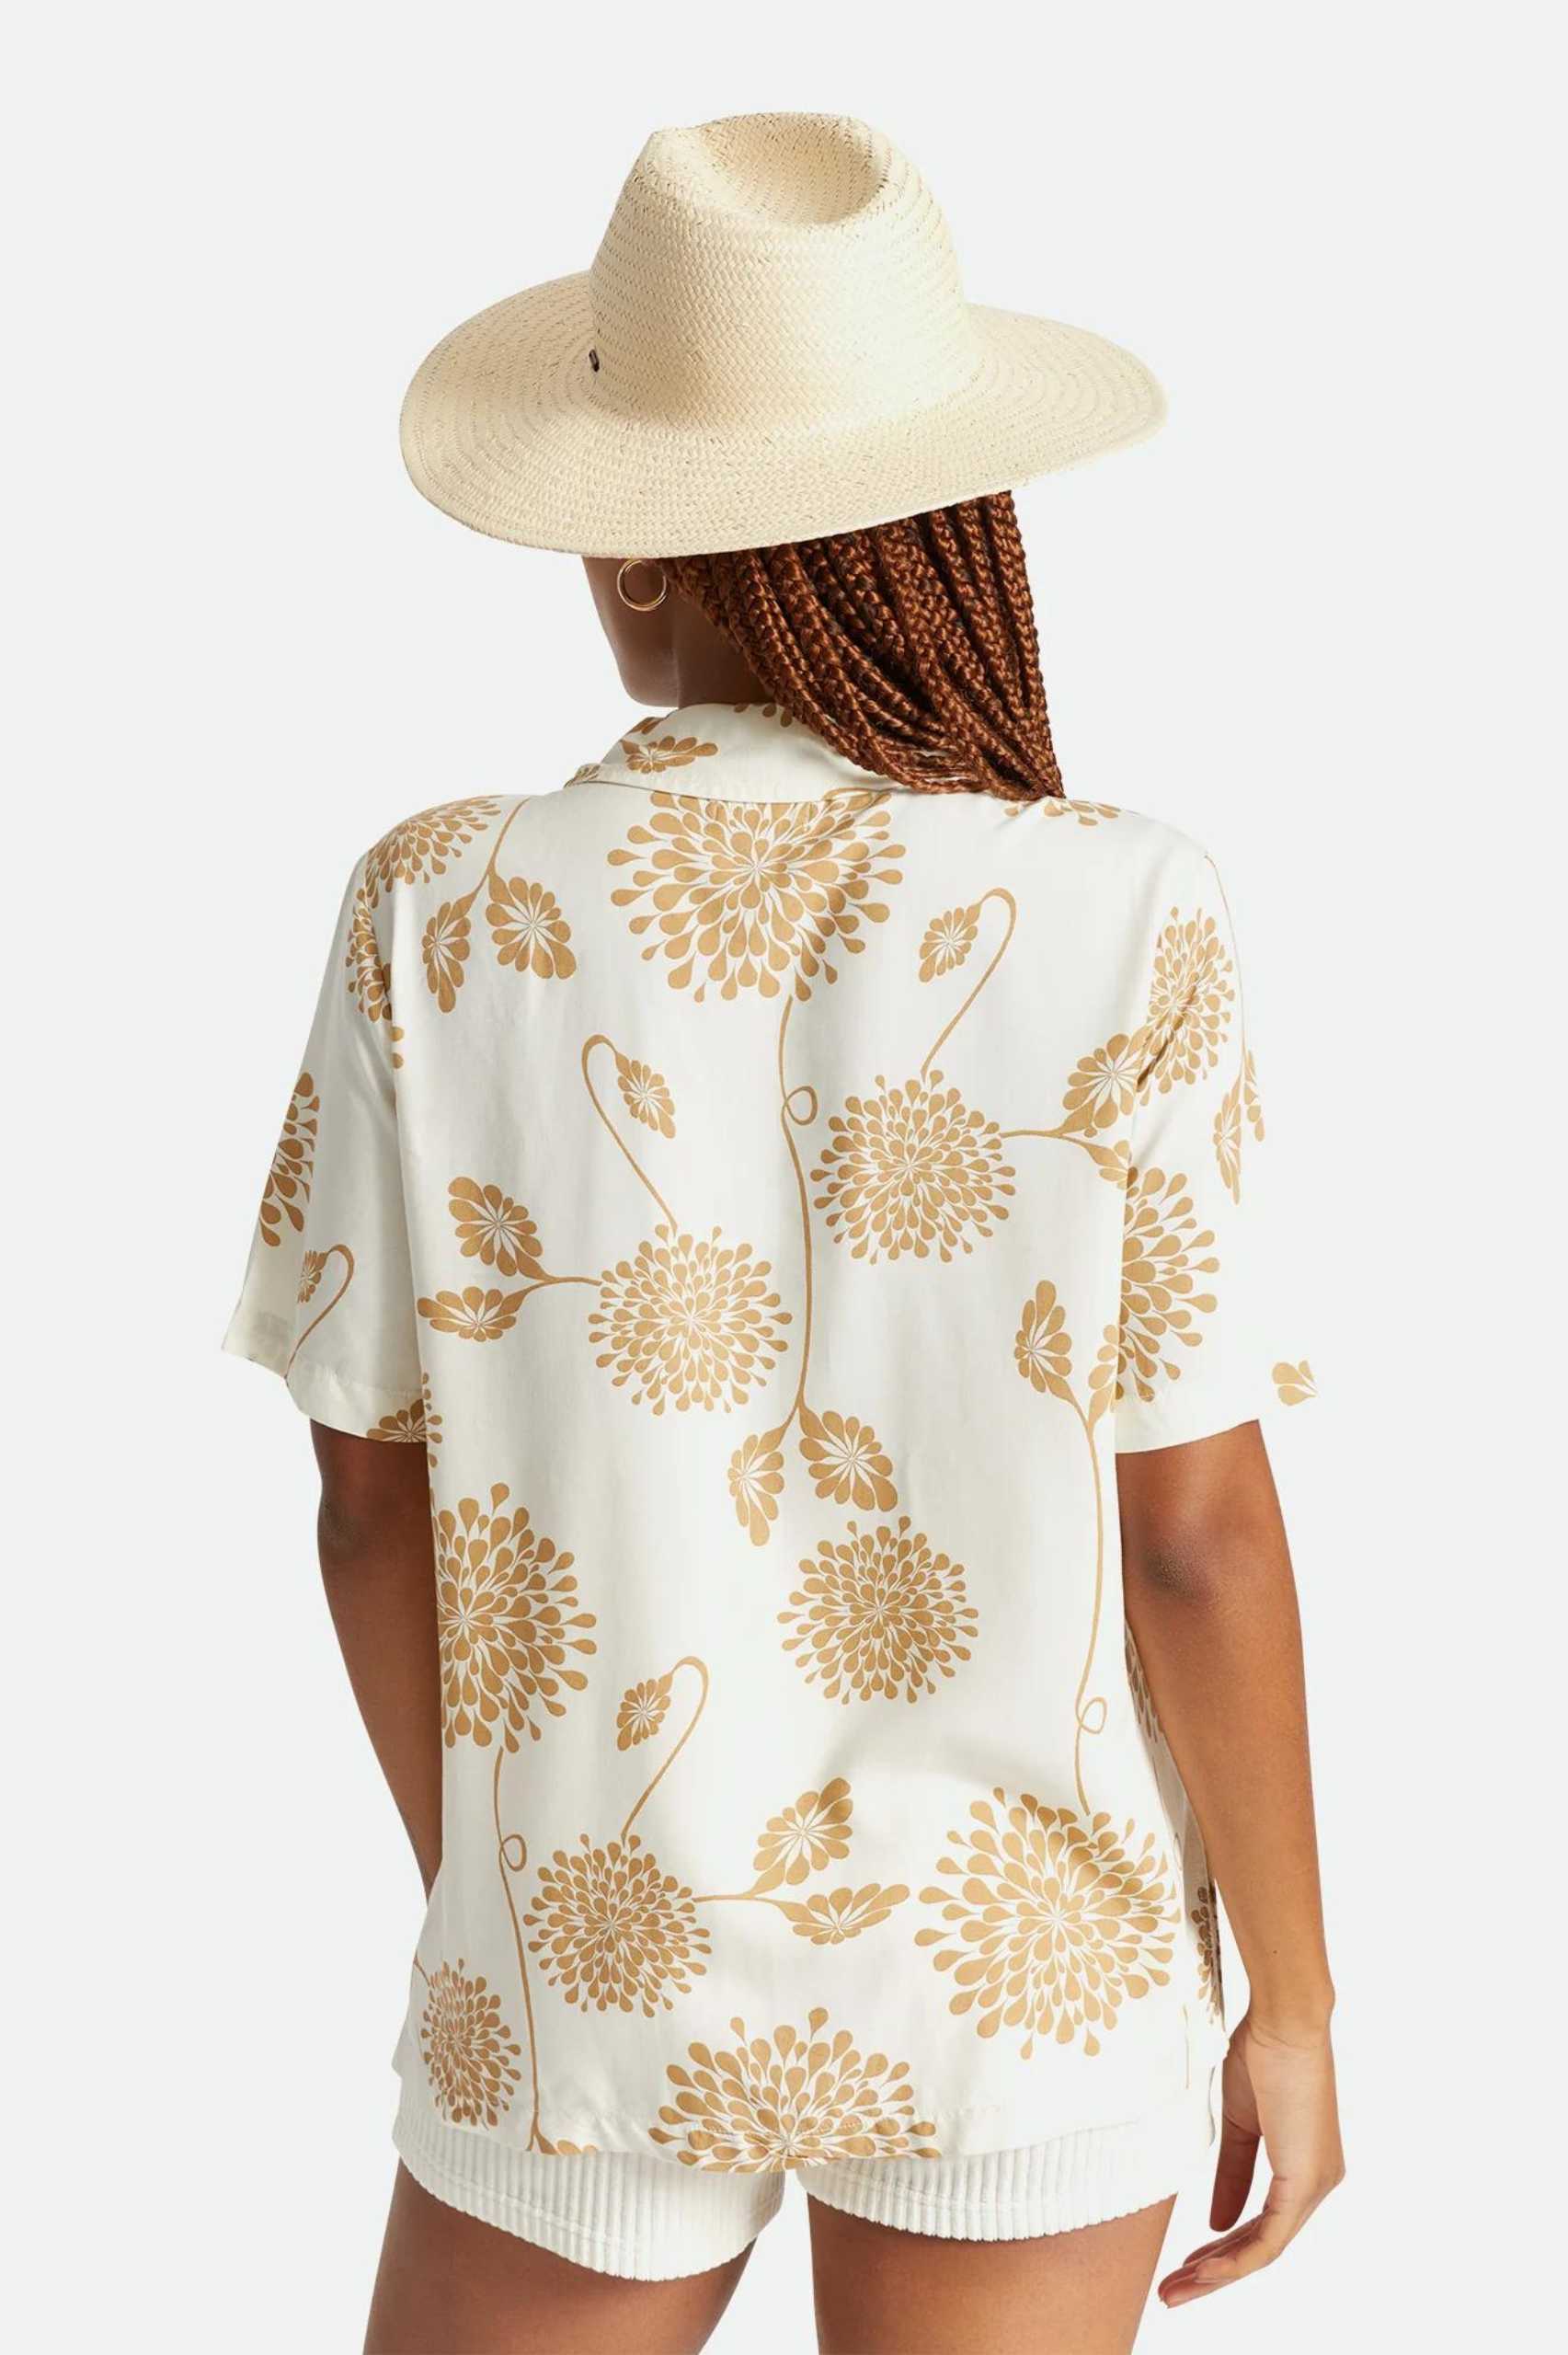 Brixton Womens Seaside Sun Hat in Natural